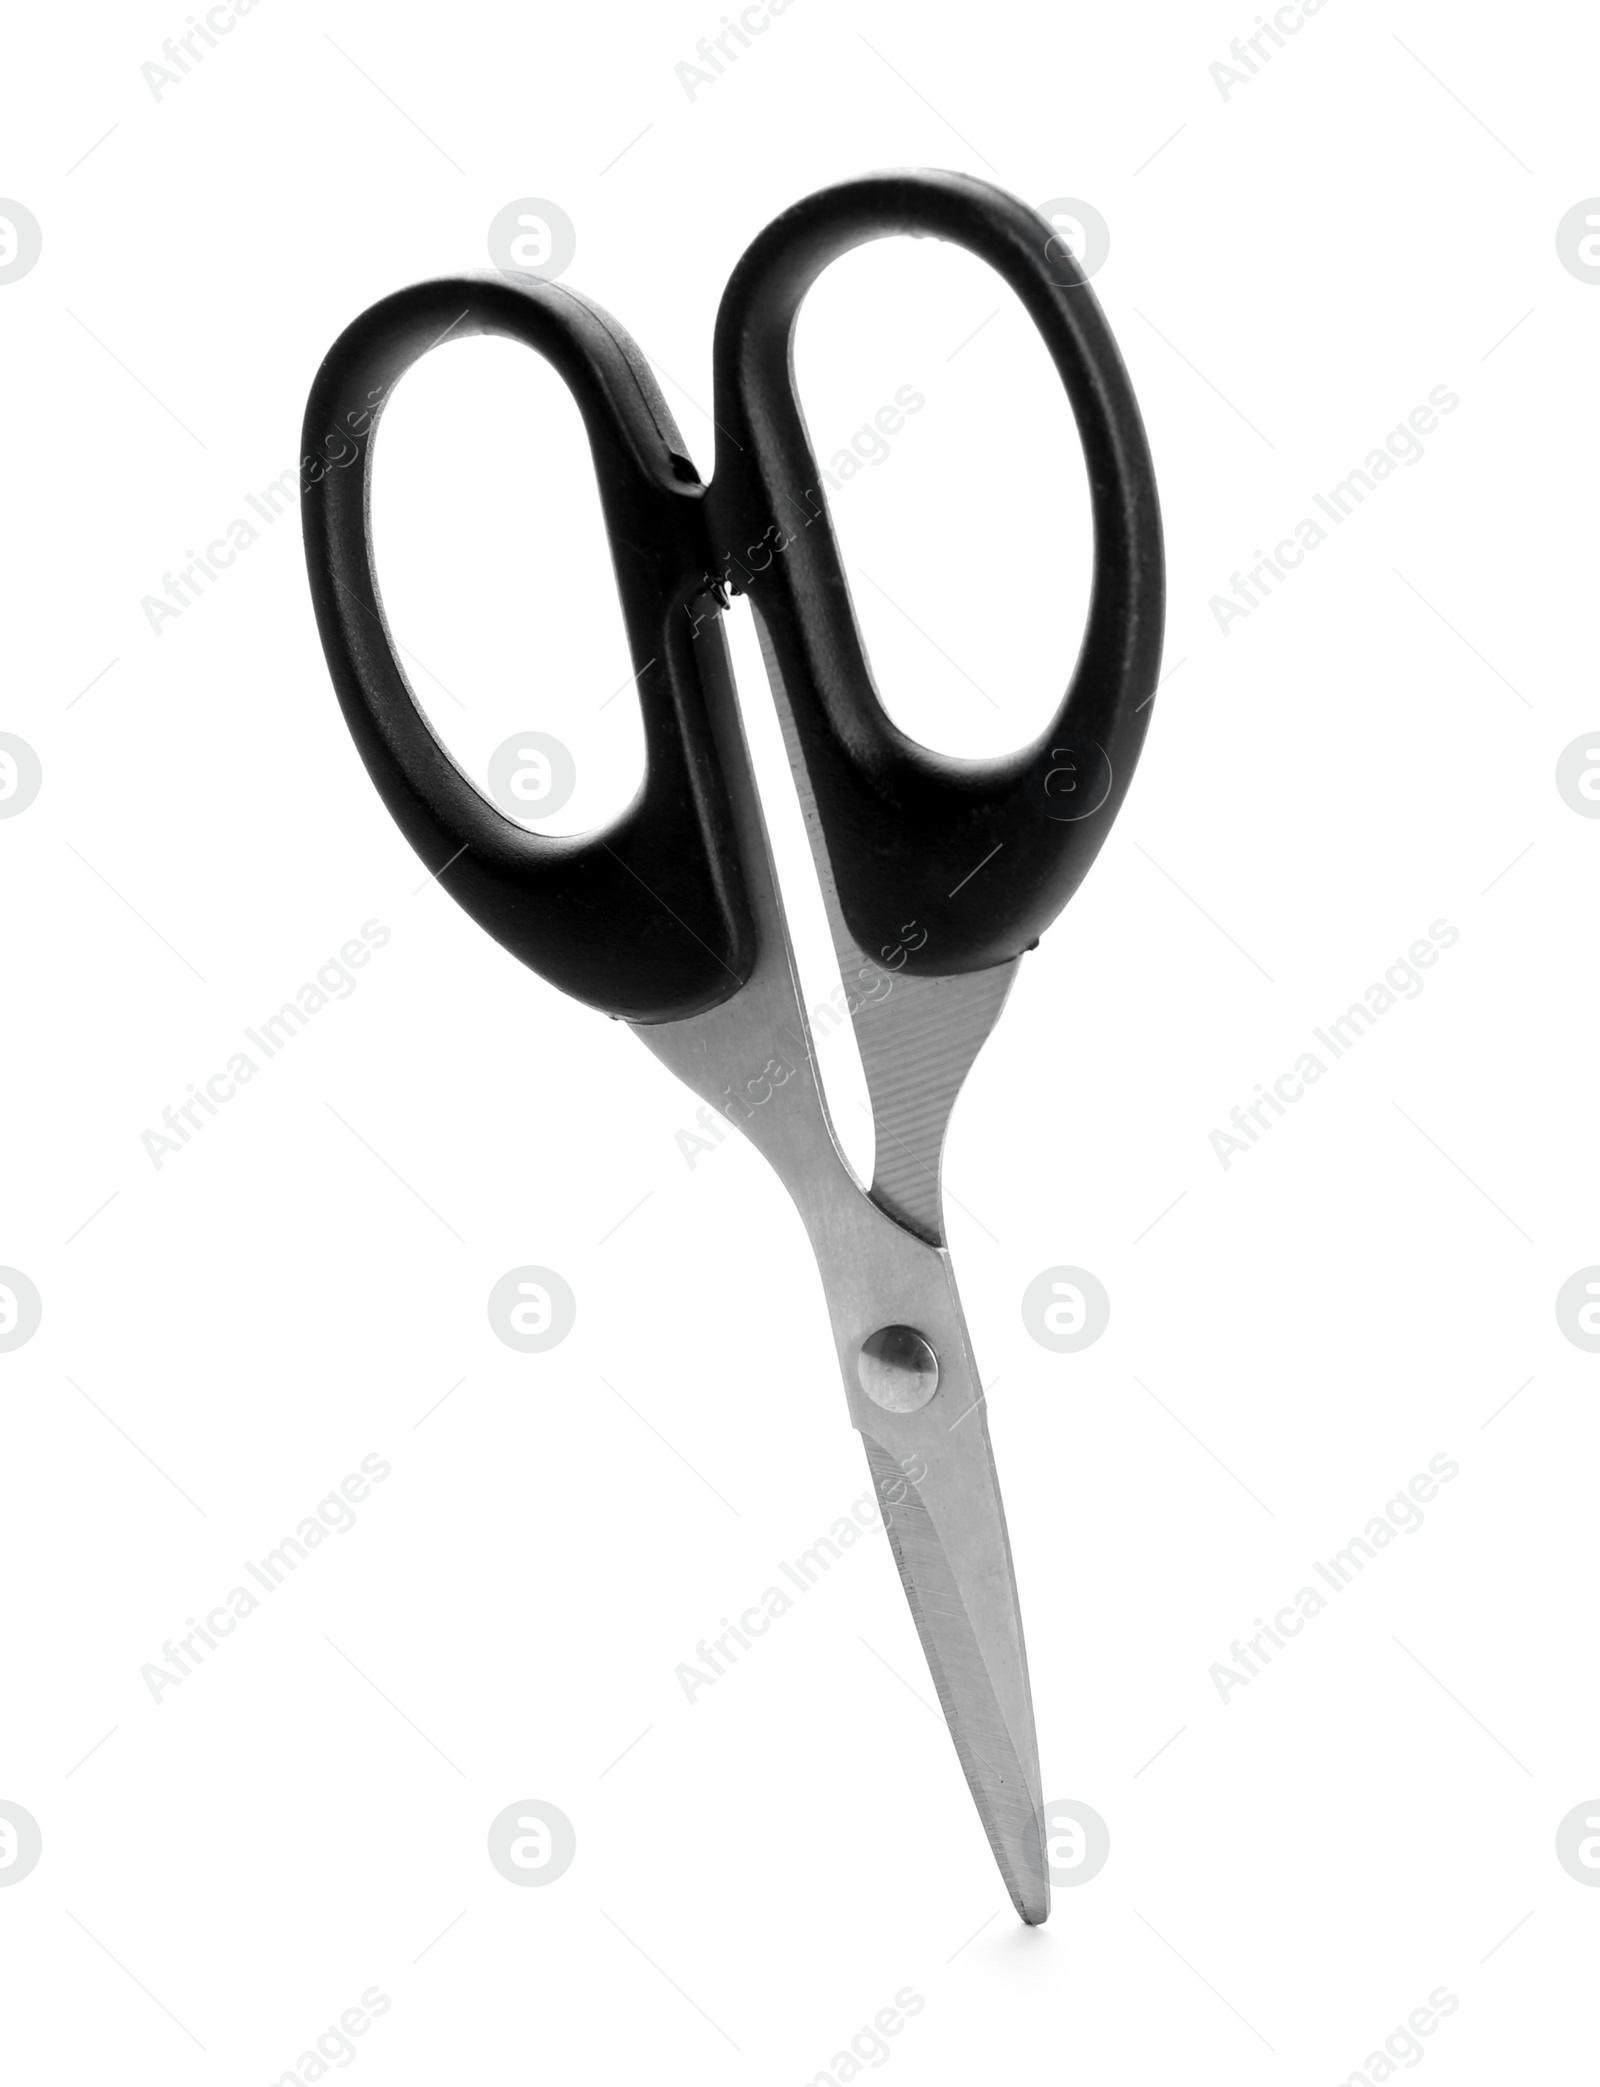 Photo of Pair of sharp scissors on white background